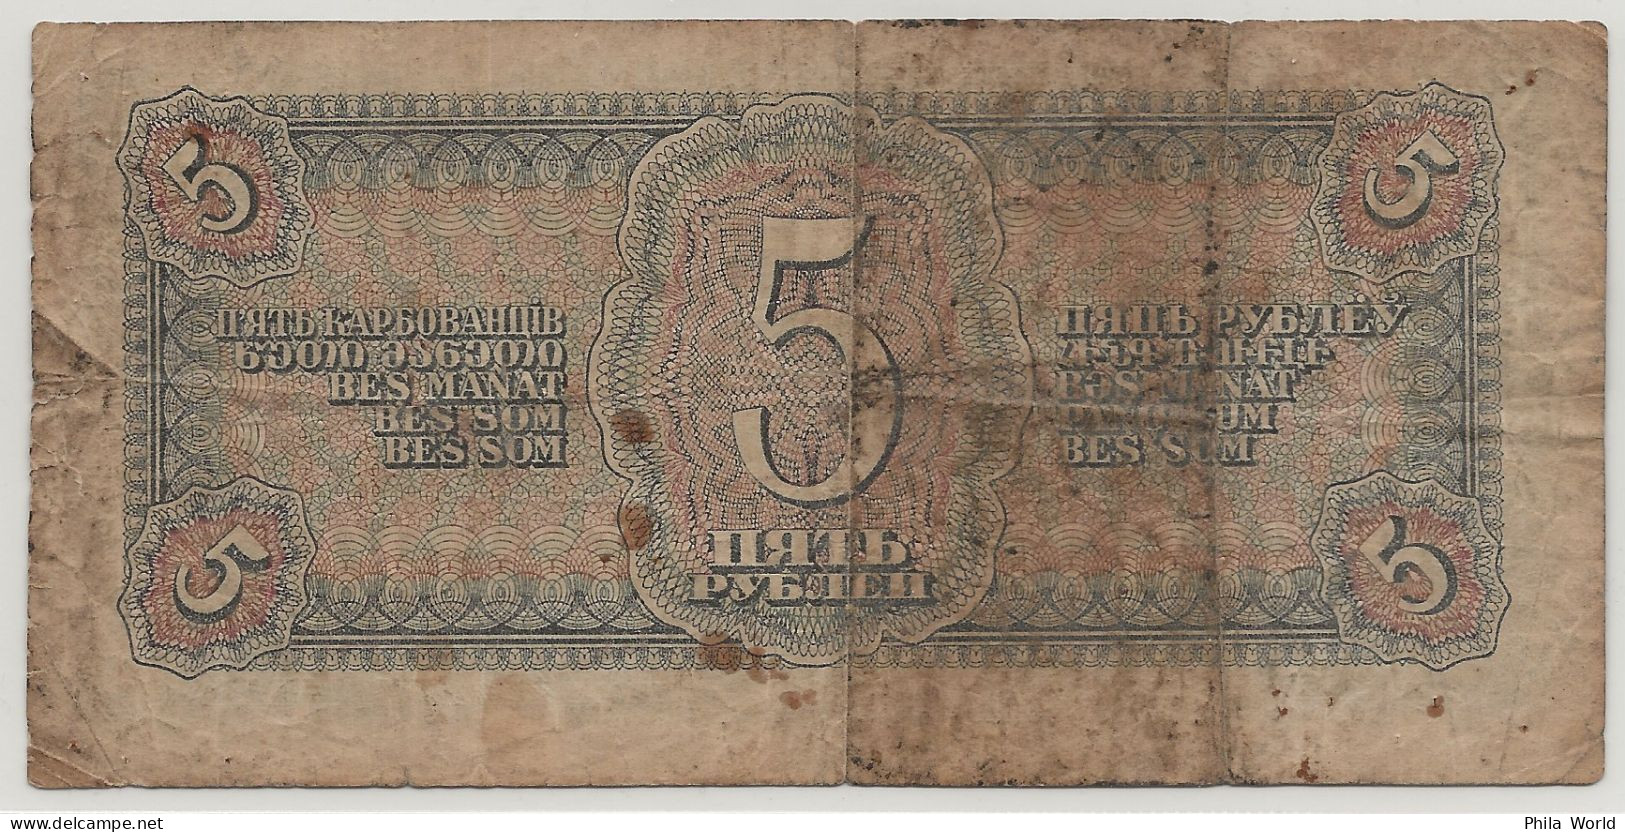 URSS CCCP Russie 1938 Billet Banque 5 Roubles Pilote Avion - Russie